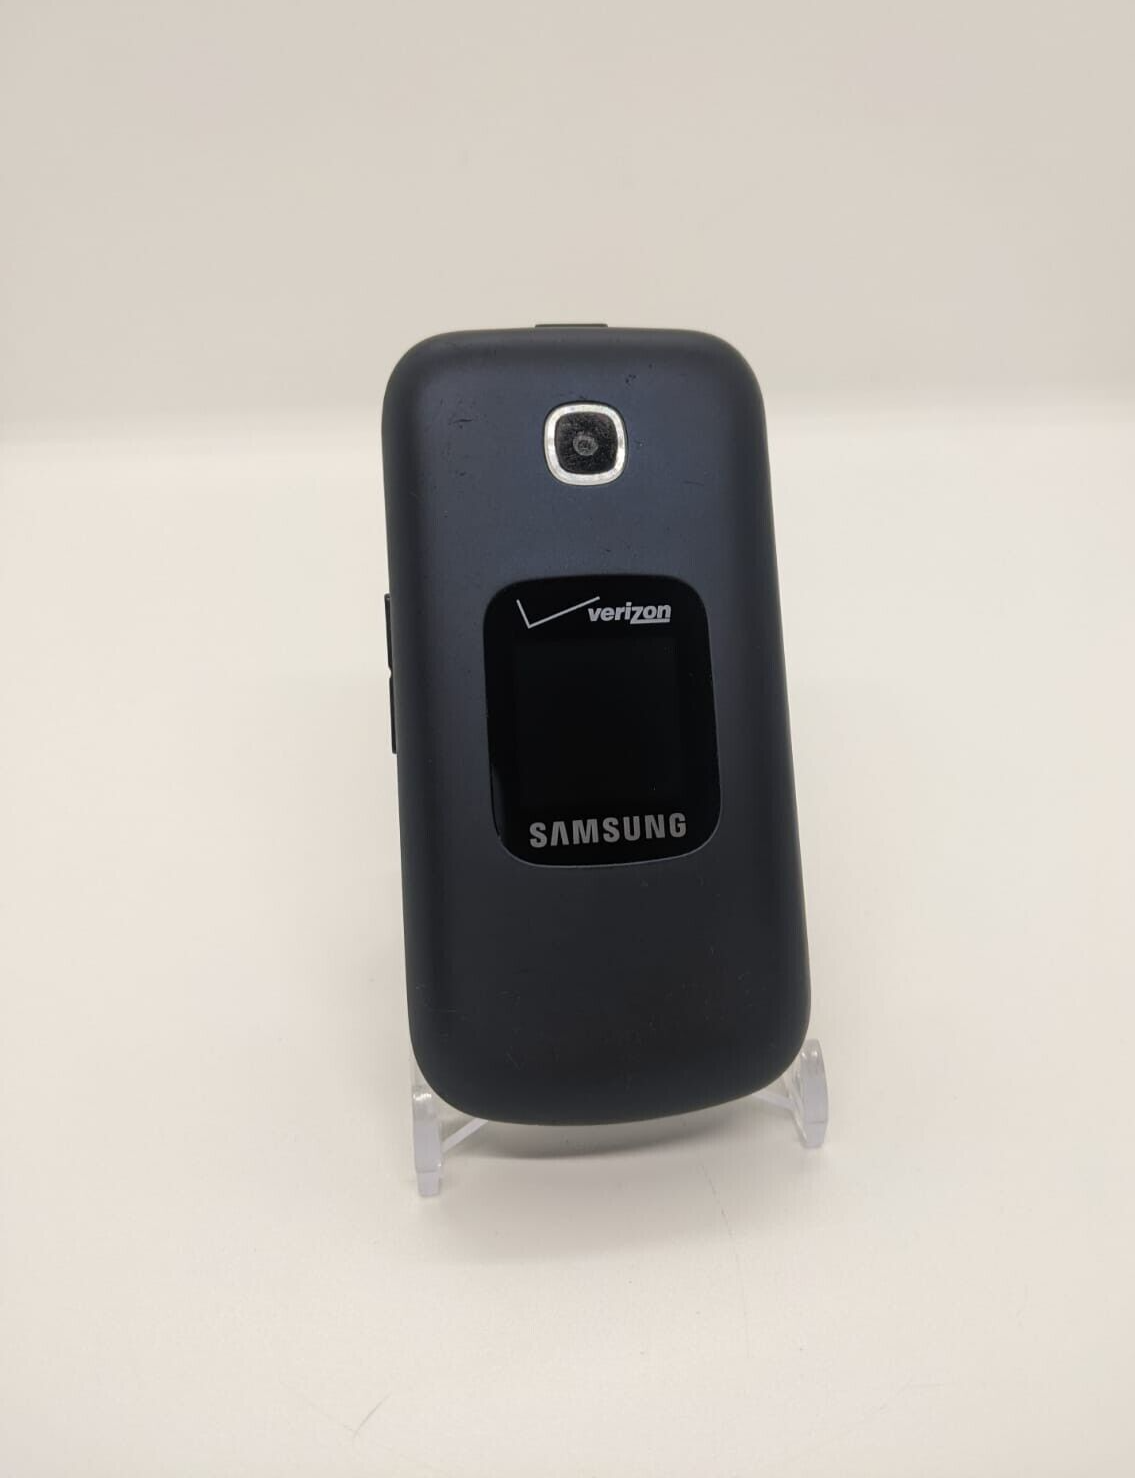 Samsung Gusto 3 64MB Verizon Blue Cellular Flip Phone SM-B311V